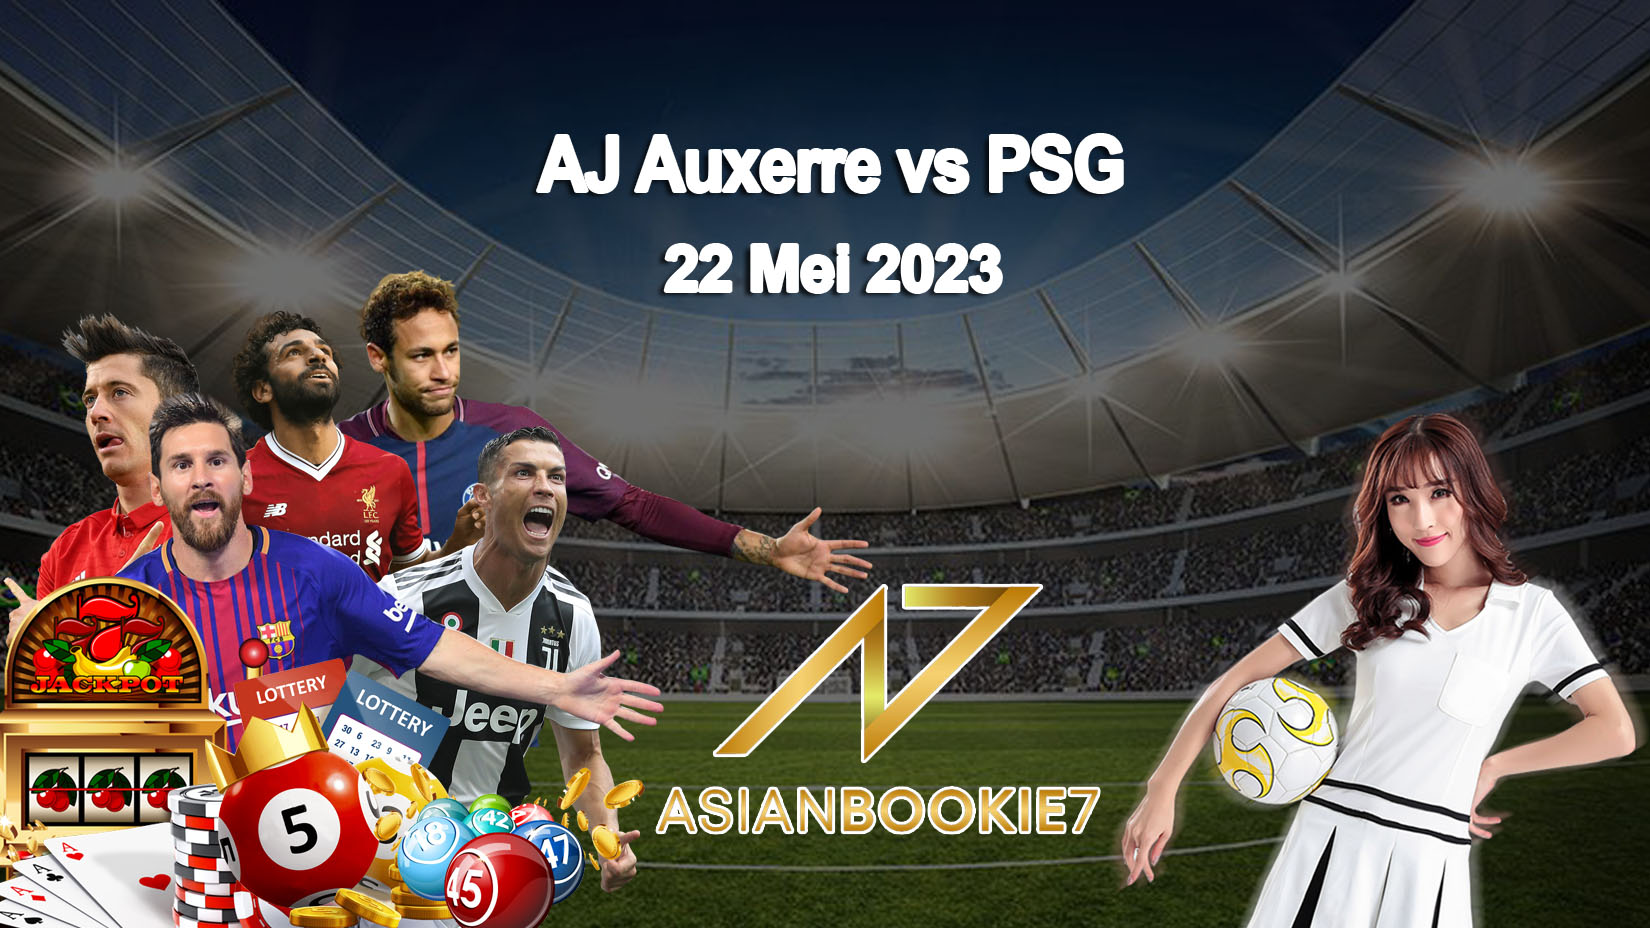 Prediksi AJ Auxerre vs PSG 22 Mei 2023